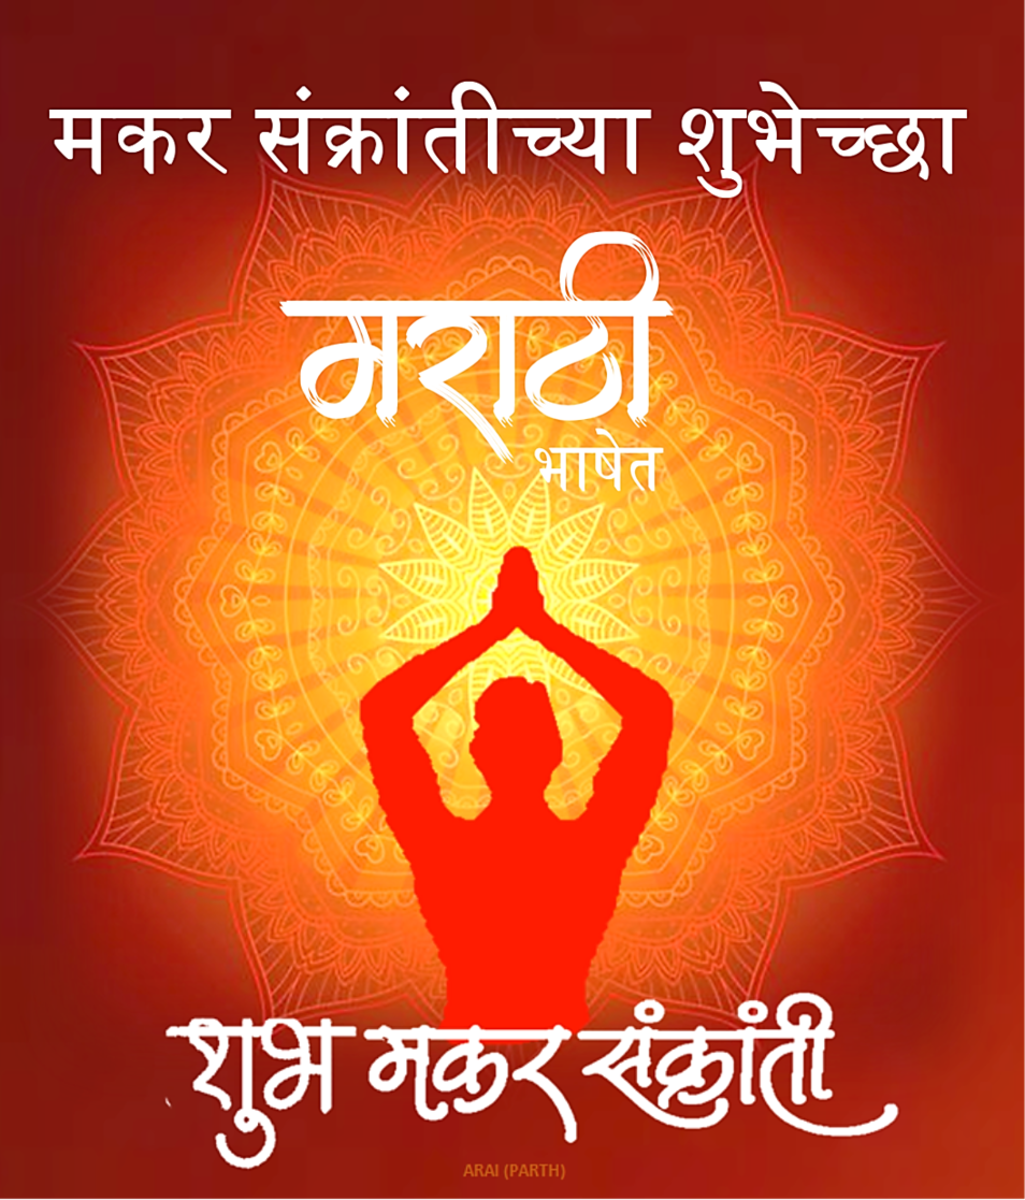 Happy Makar Sankranti Wishes and Greetings in the Marathi Language